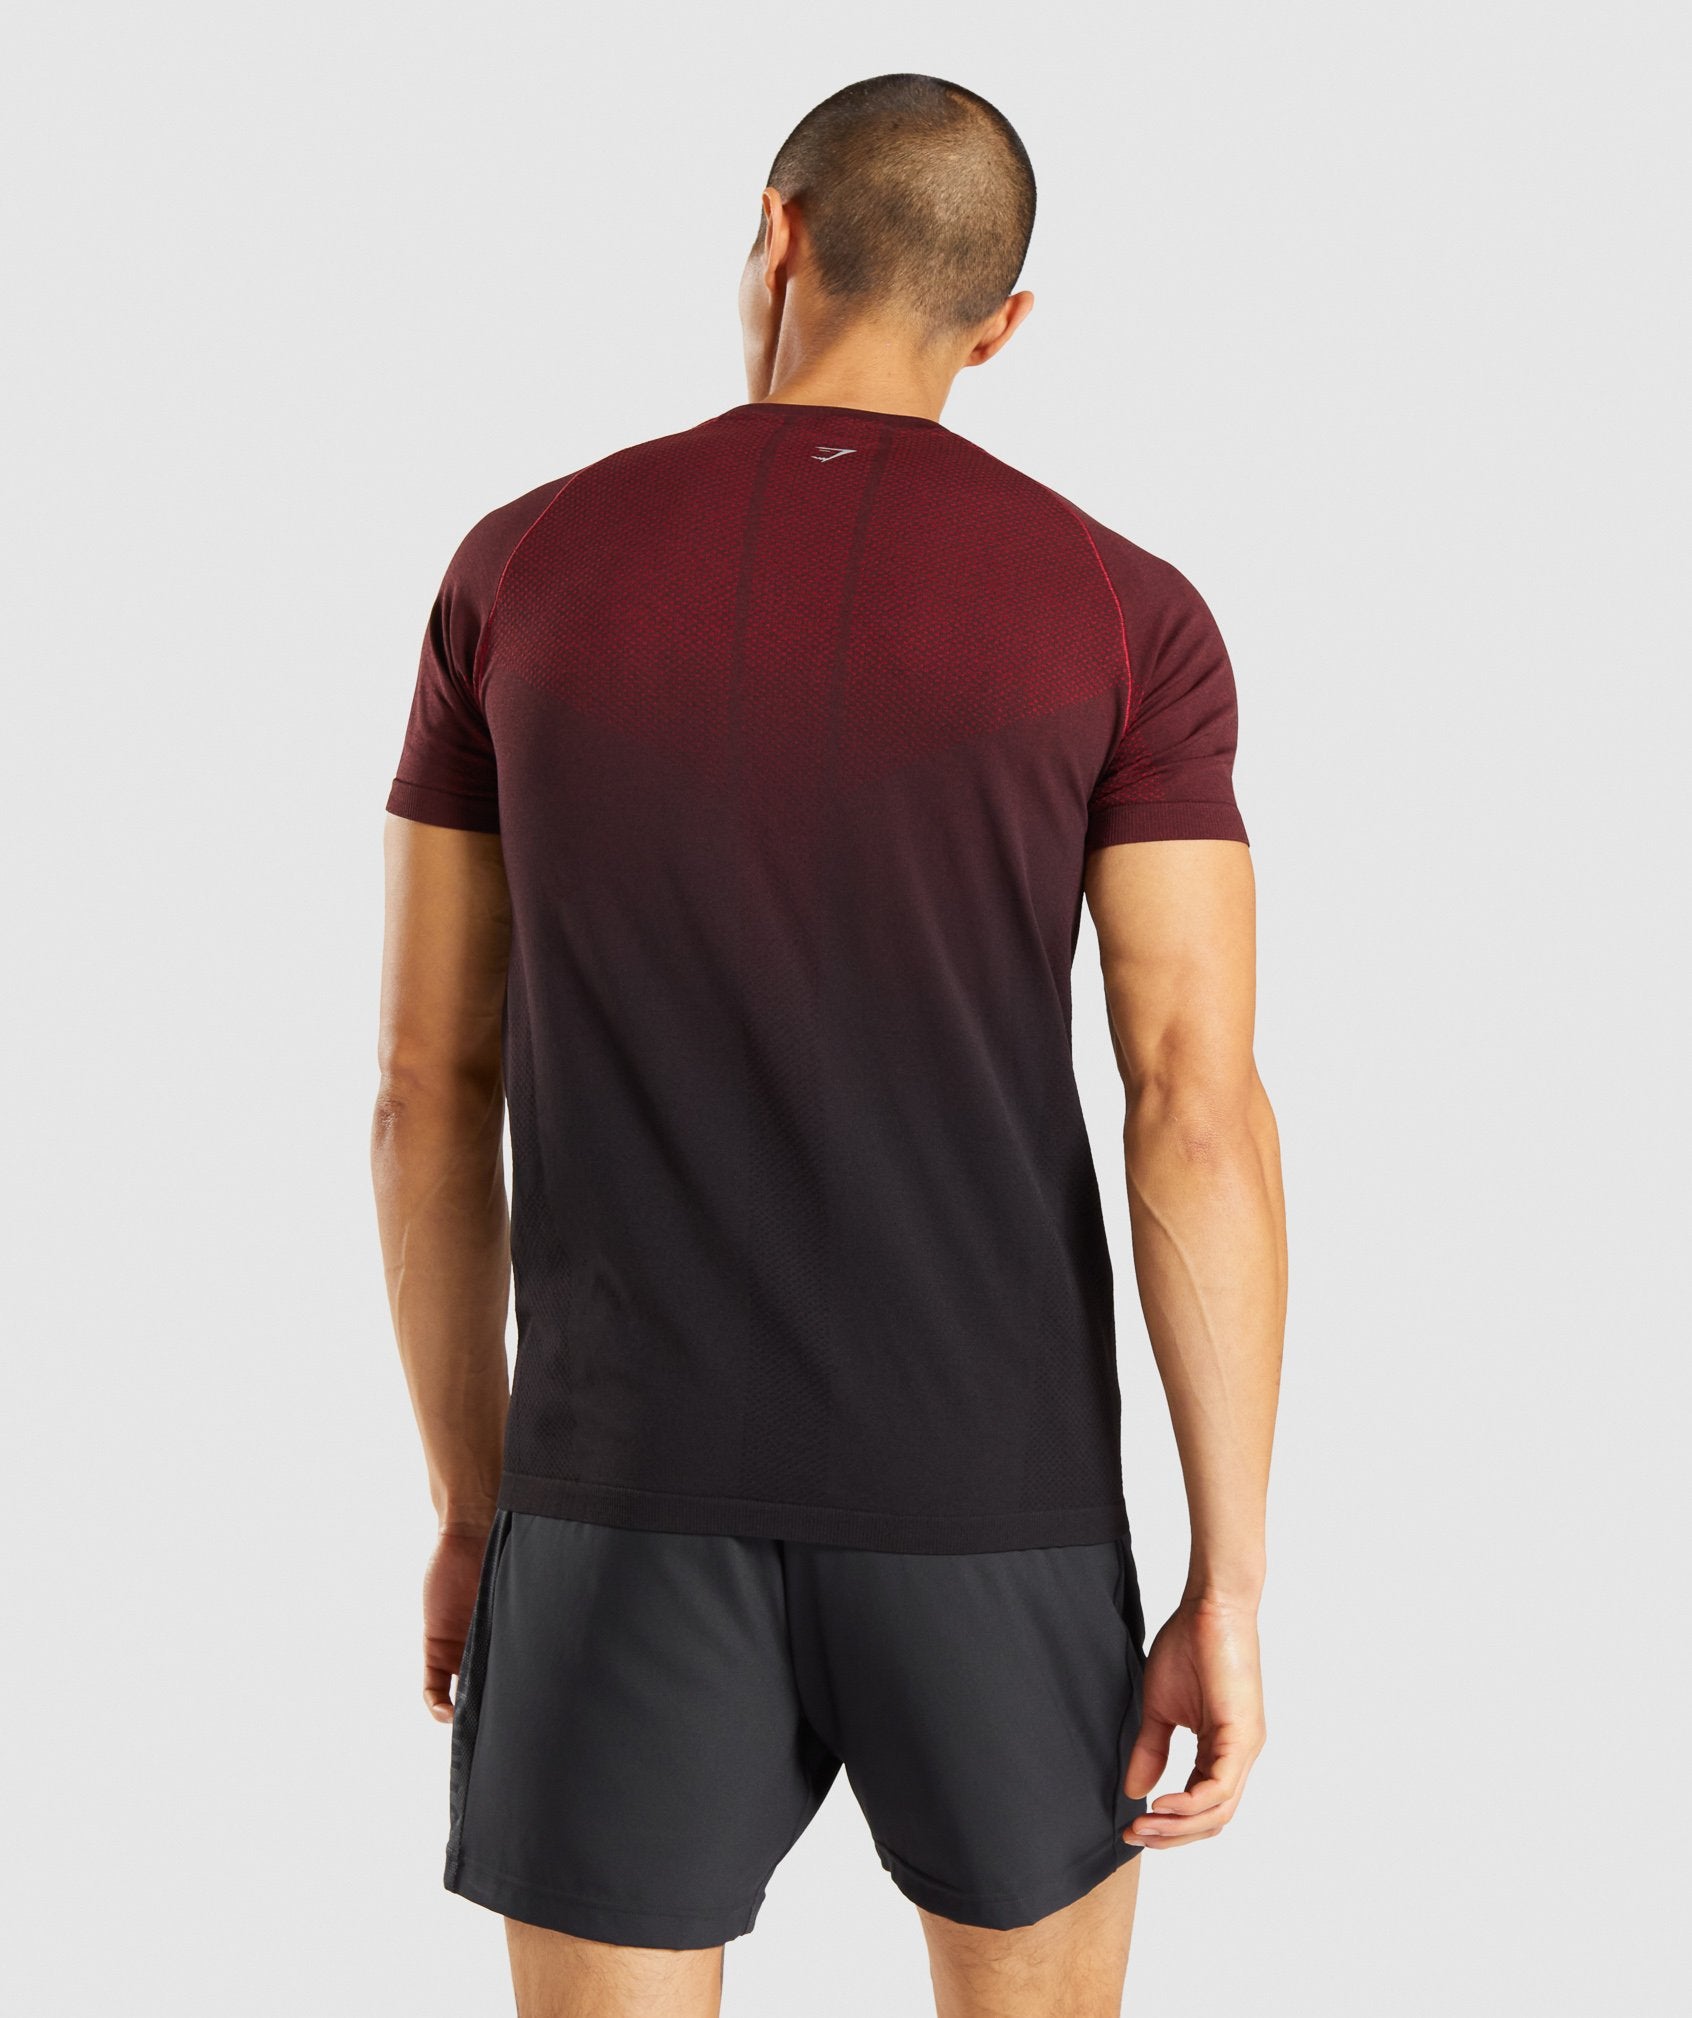 Vital Ombre Seamless T-Shirt in Burgundy Marl/Black